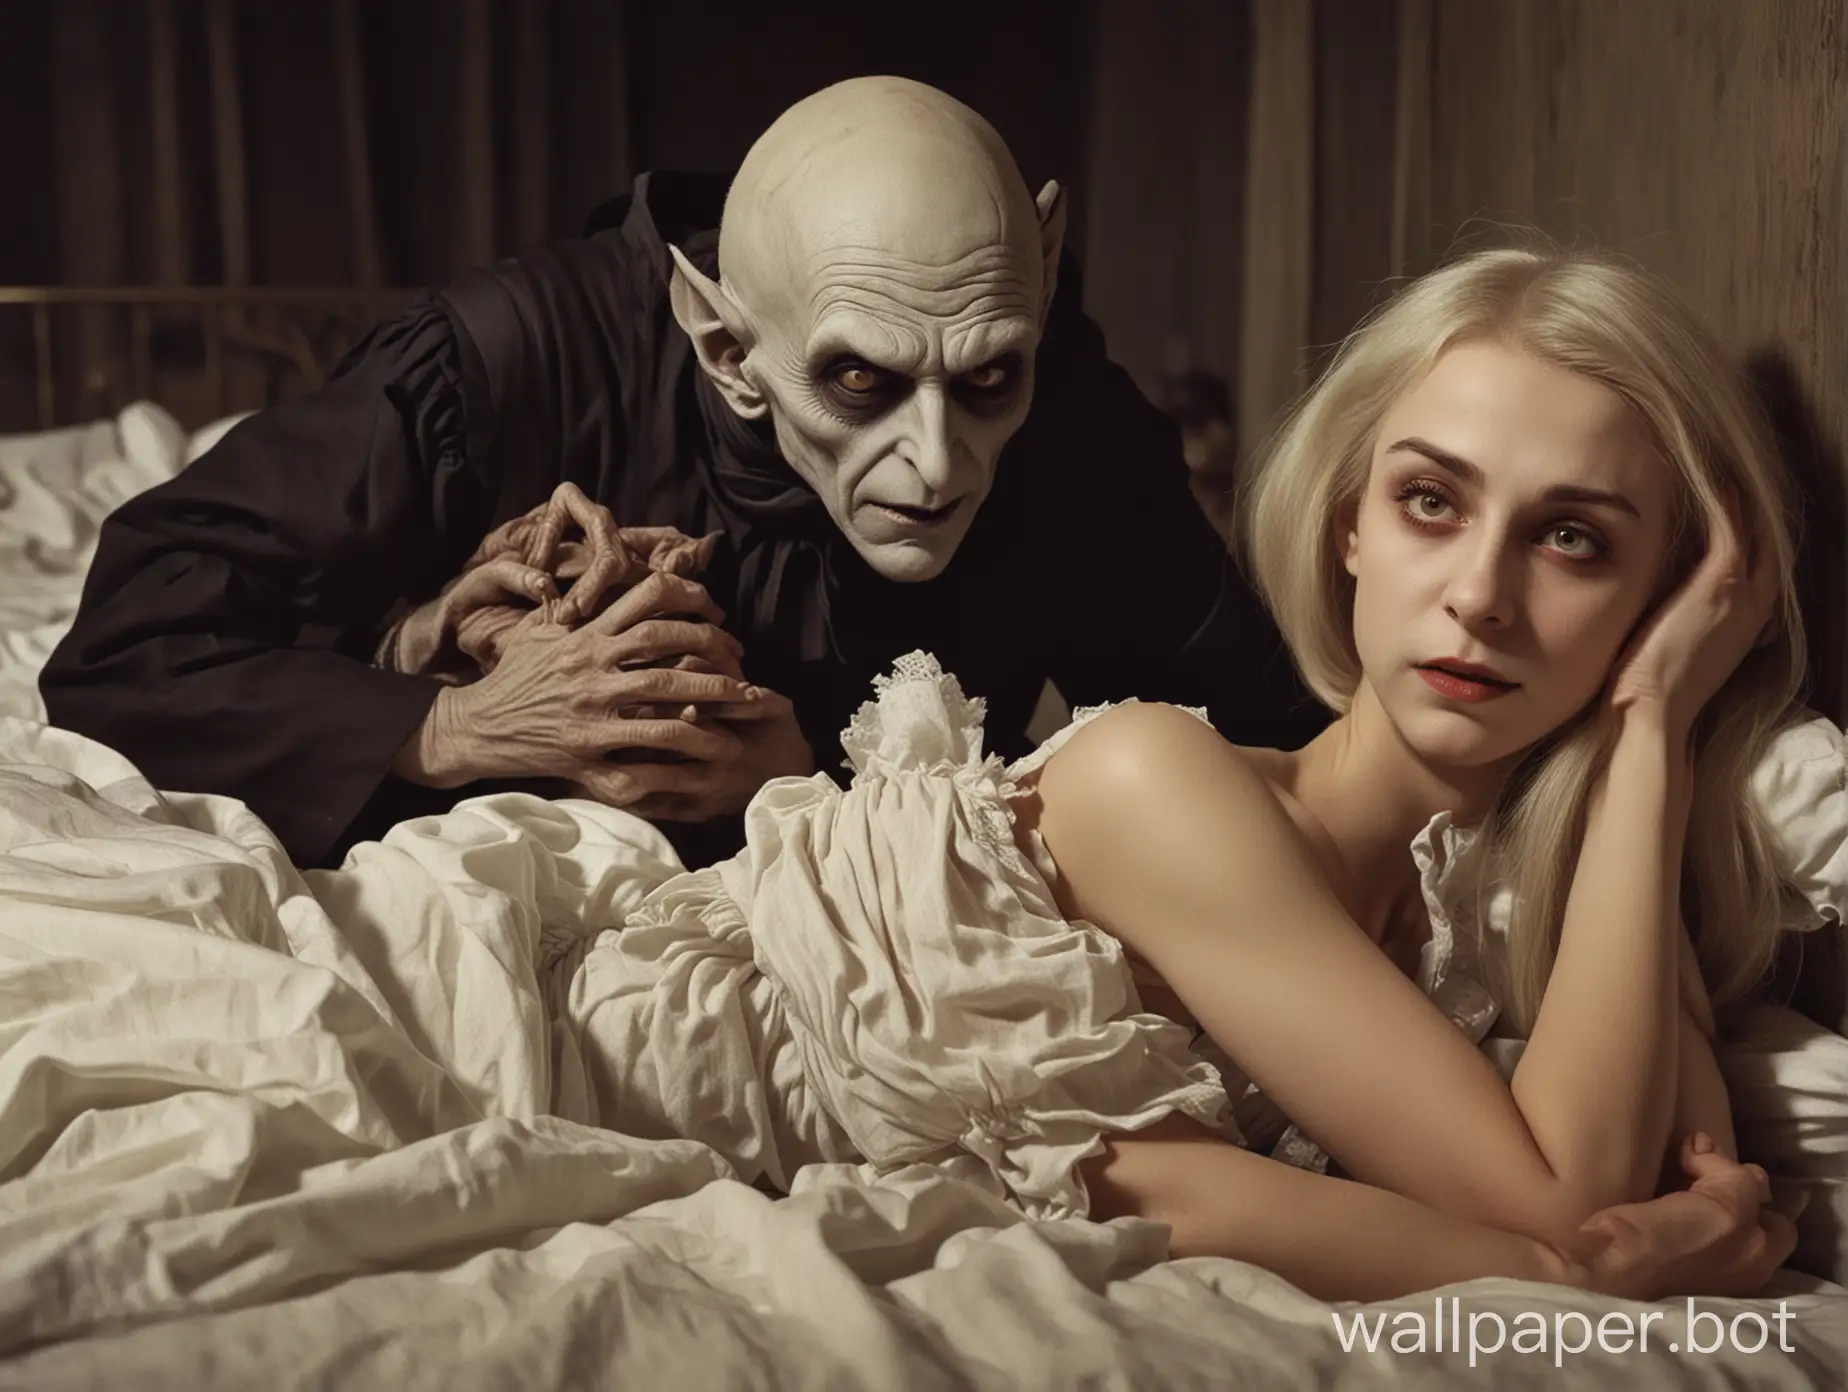 Nosferatu leaned over the sleeping girl